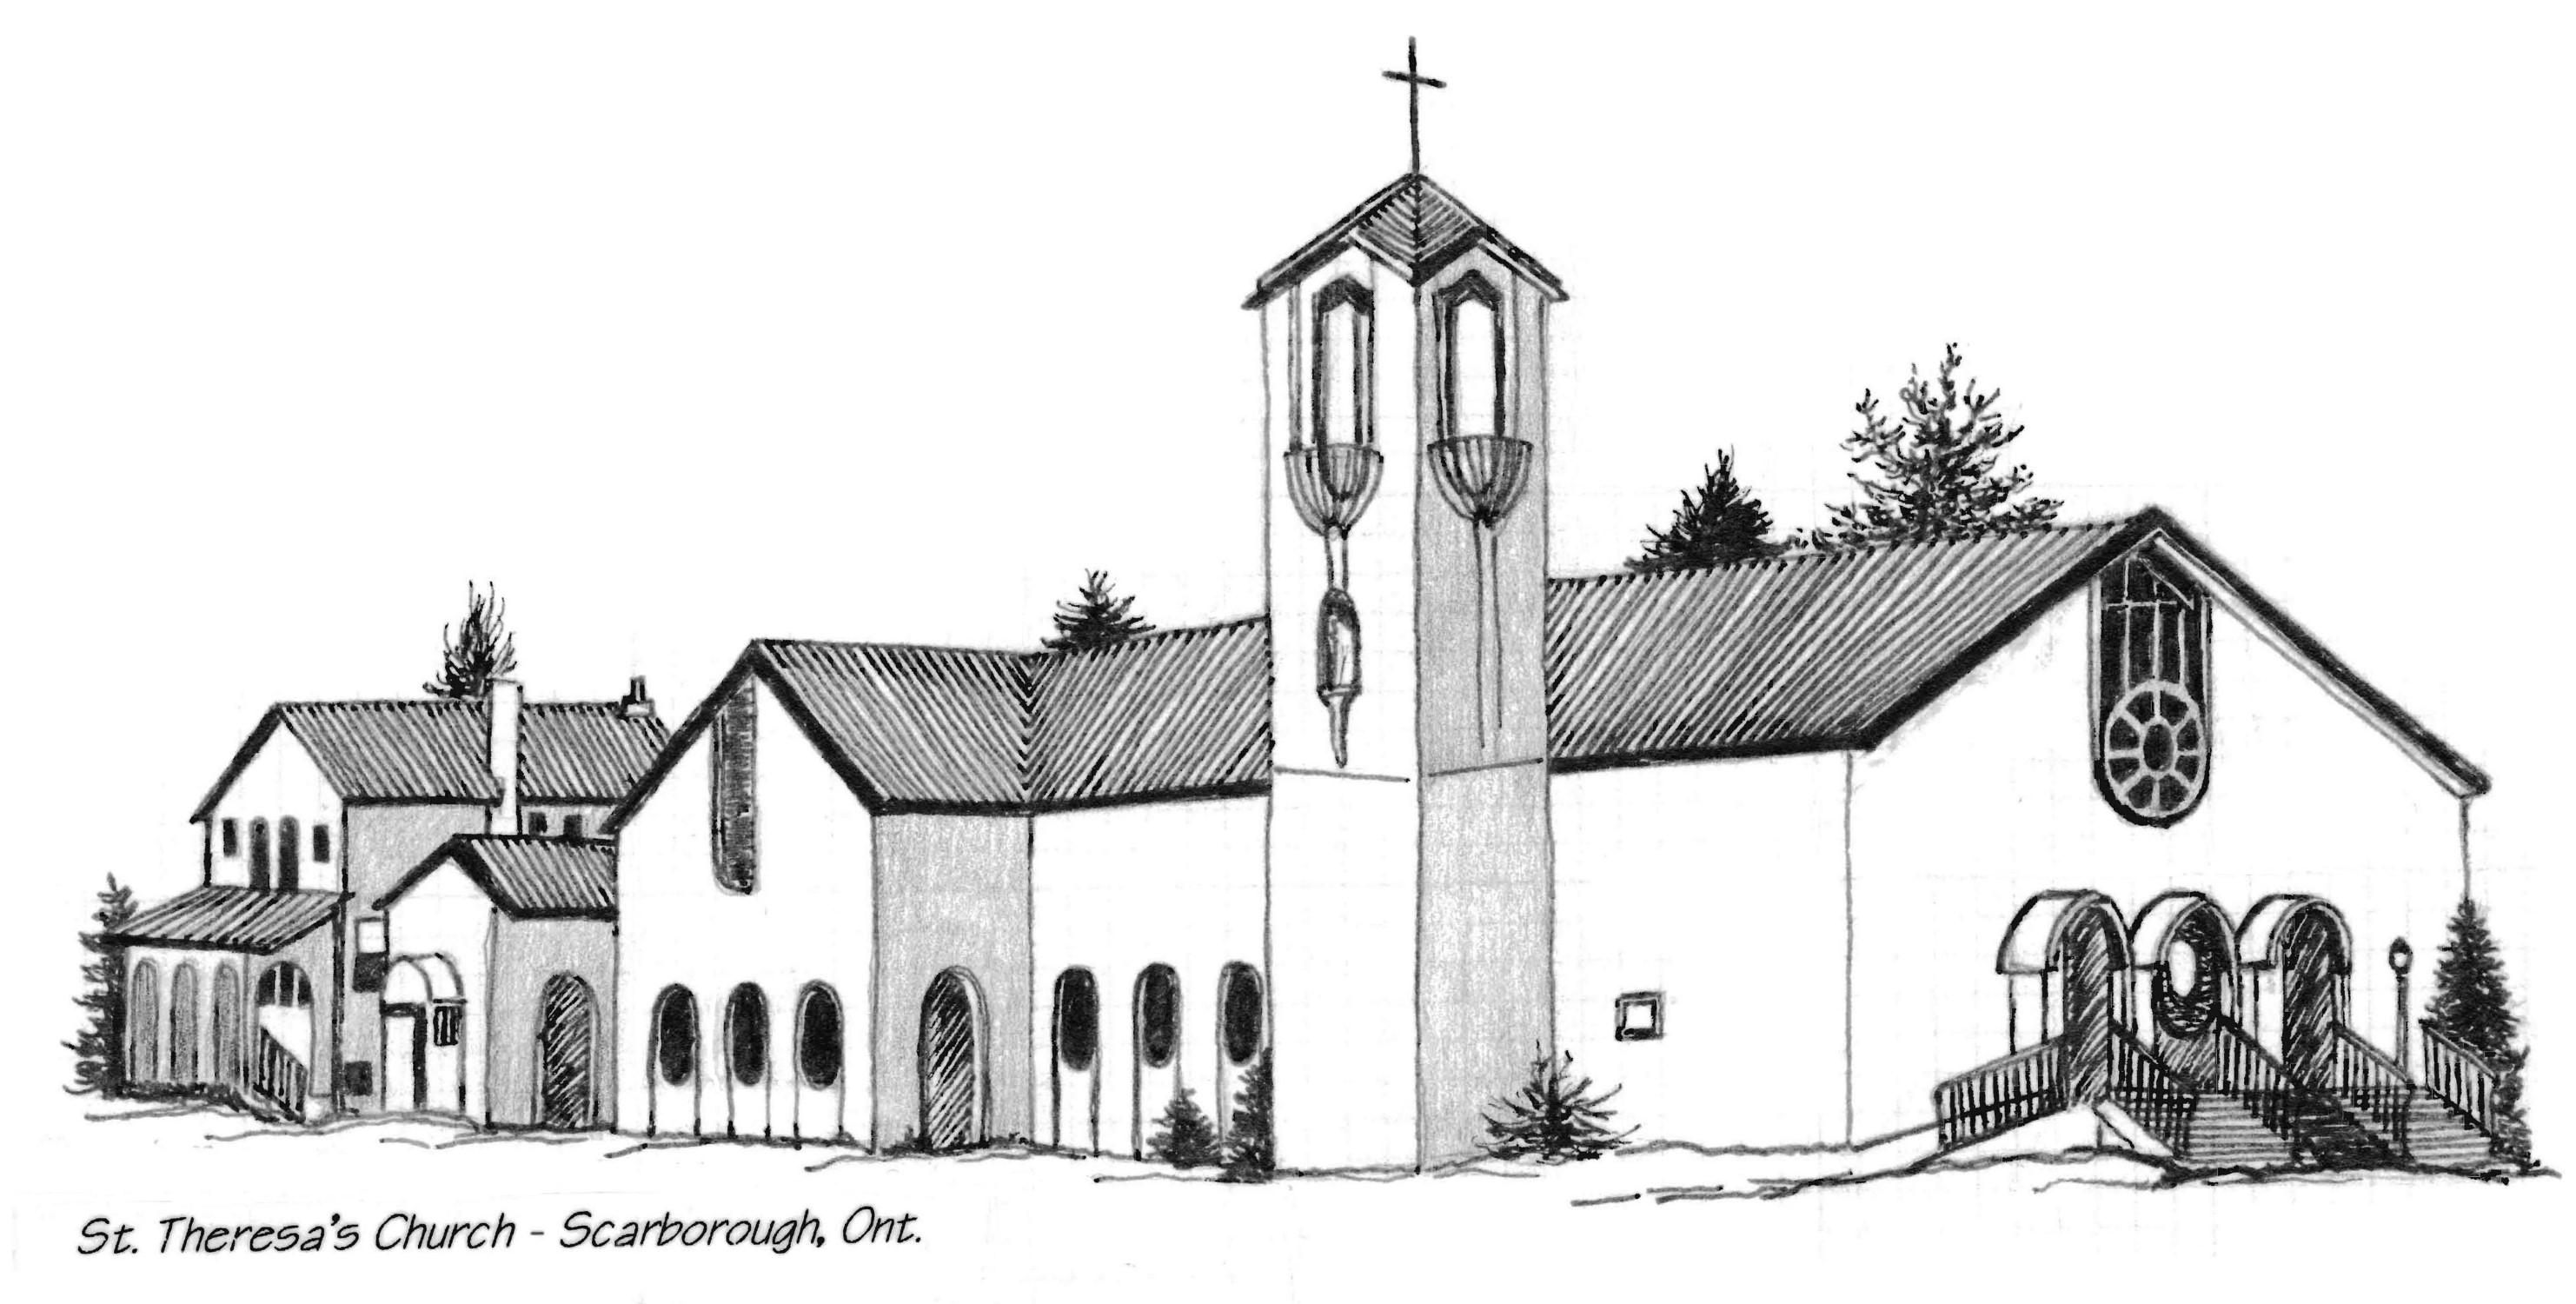 church image in pencil